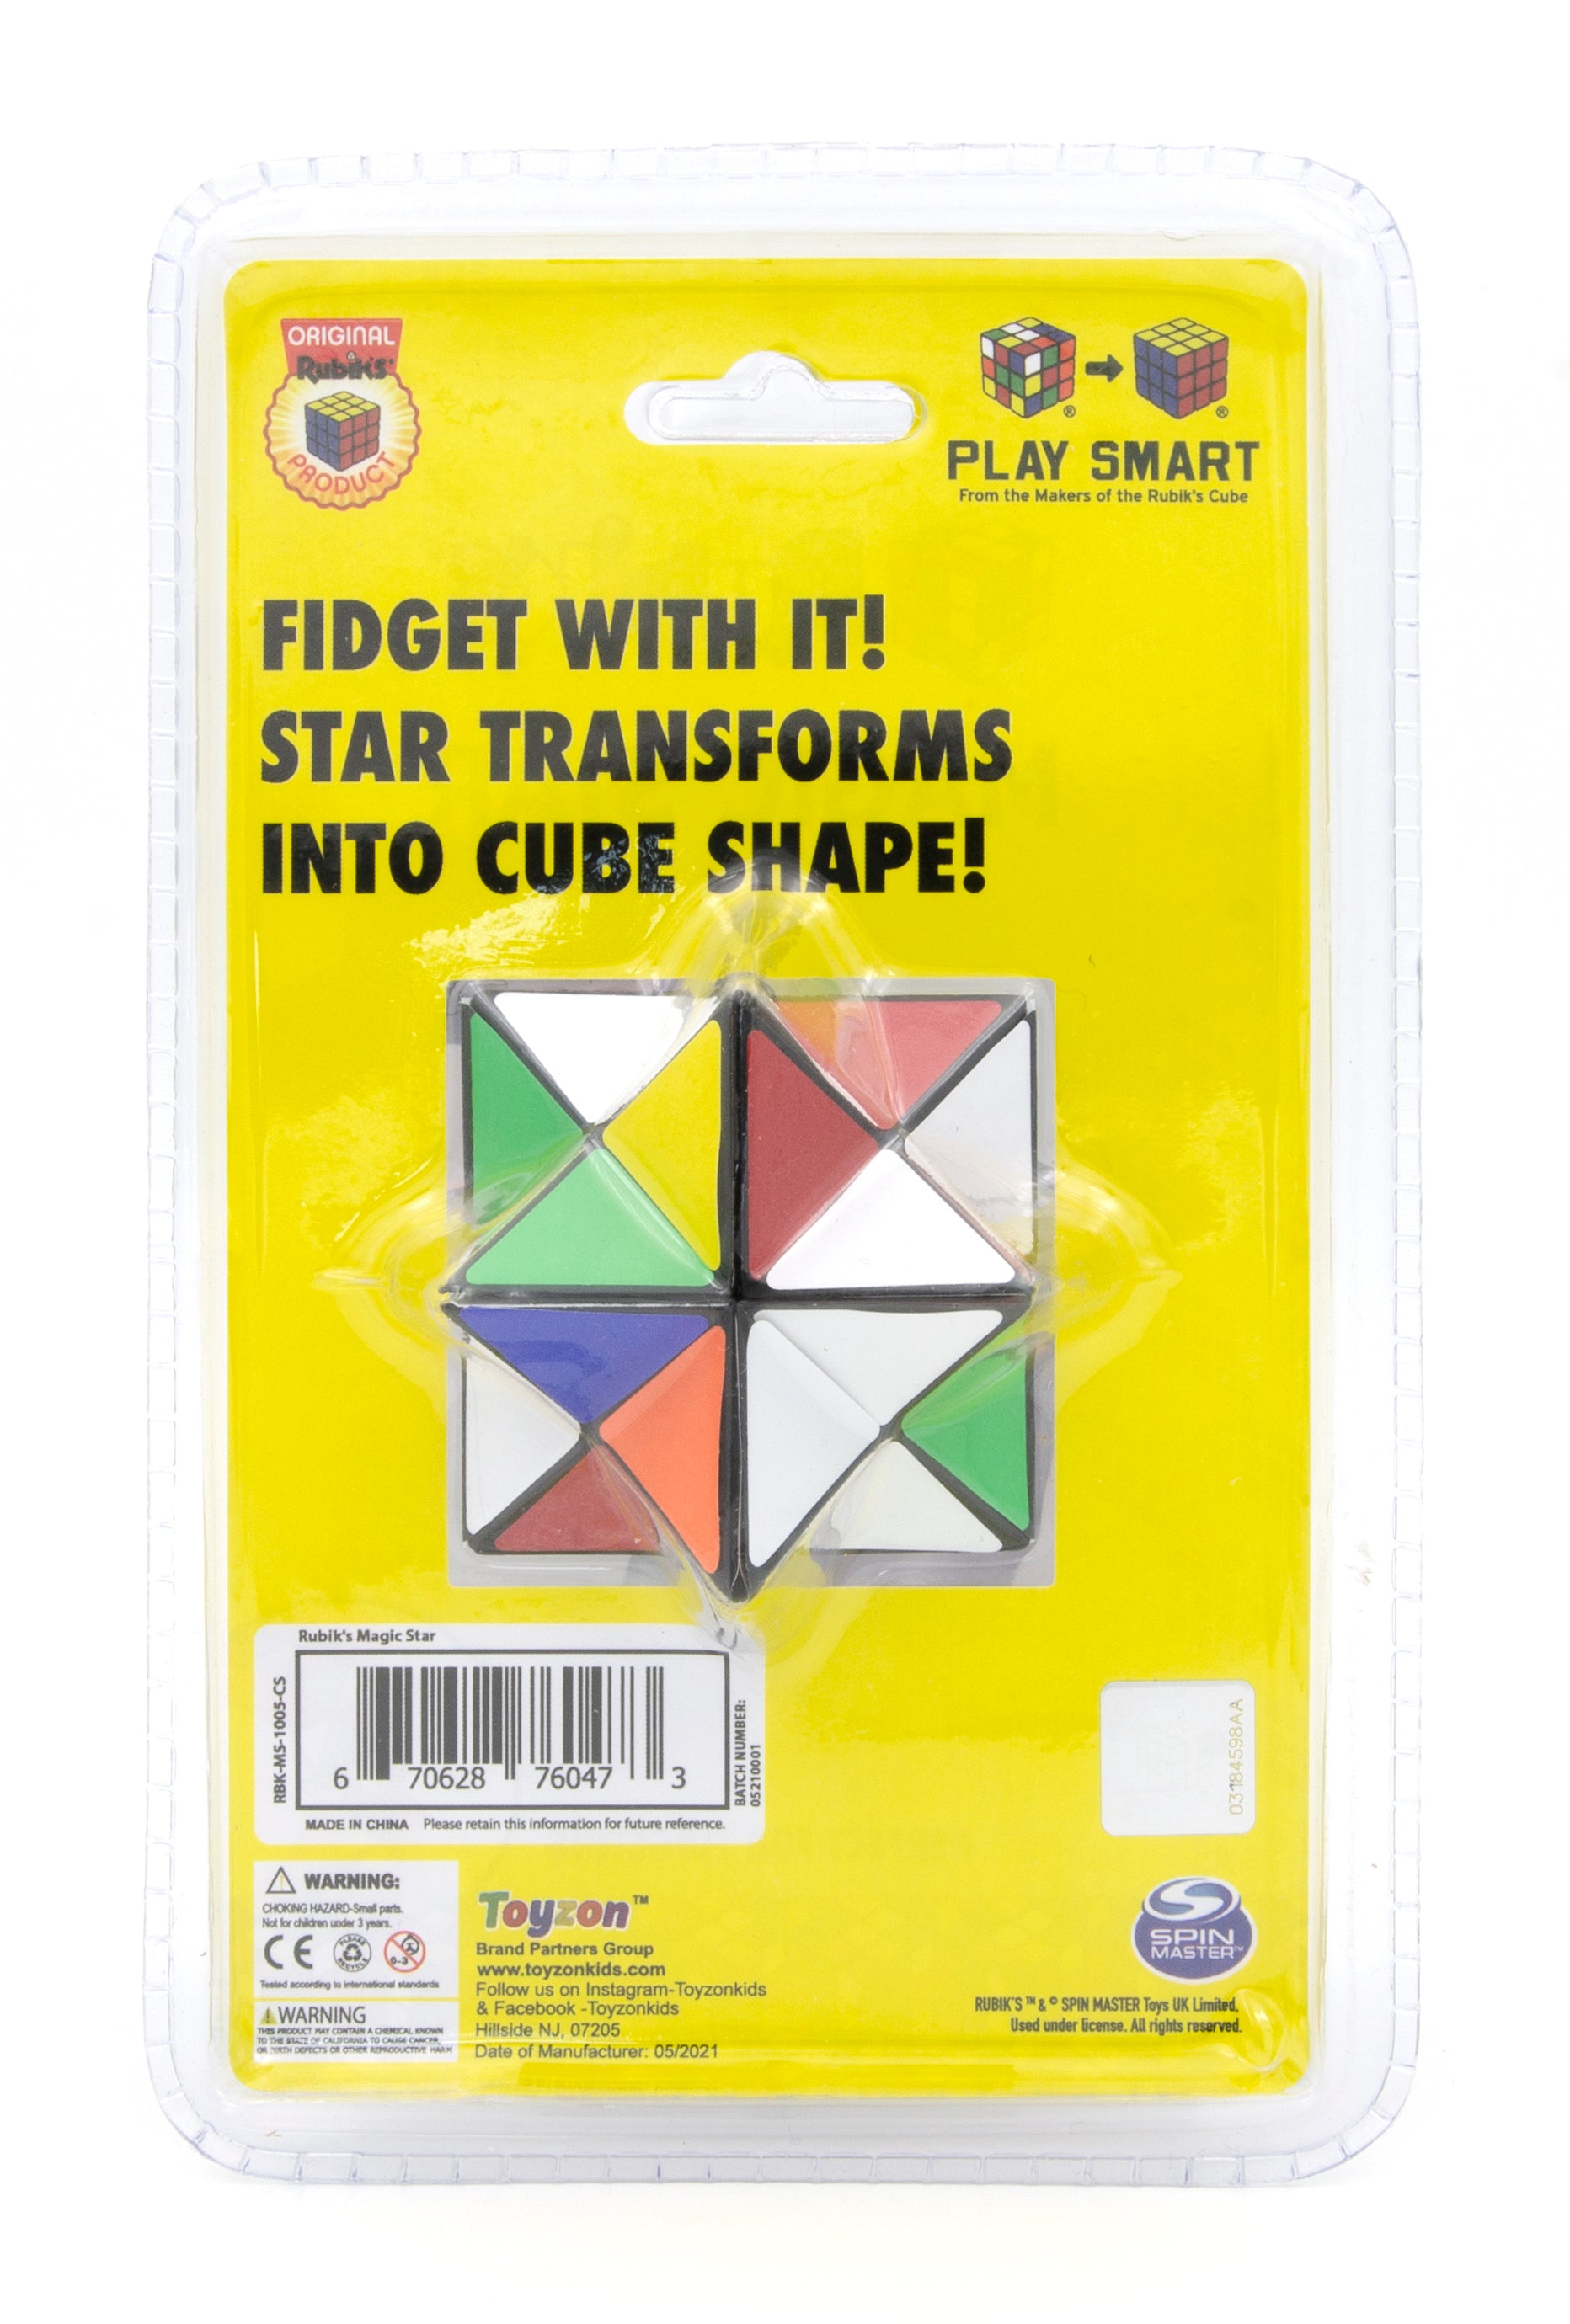 Rubiks Magic Star Hangsell